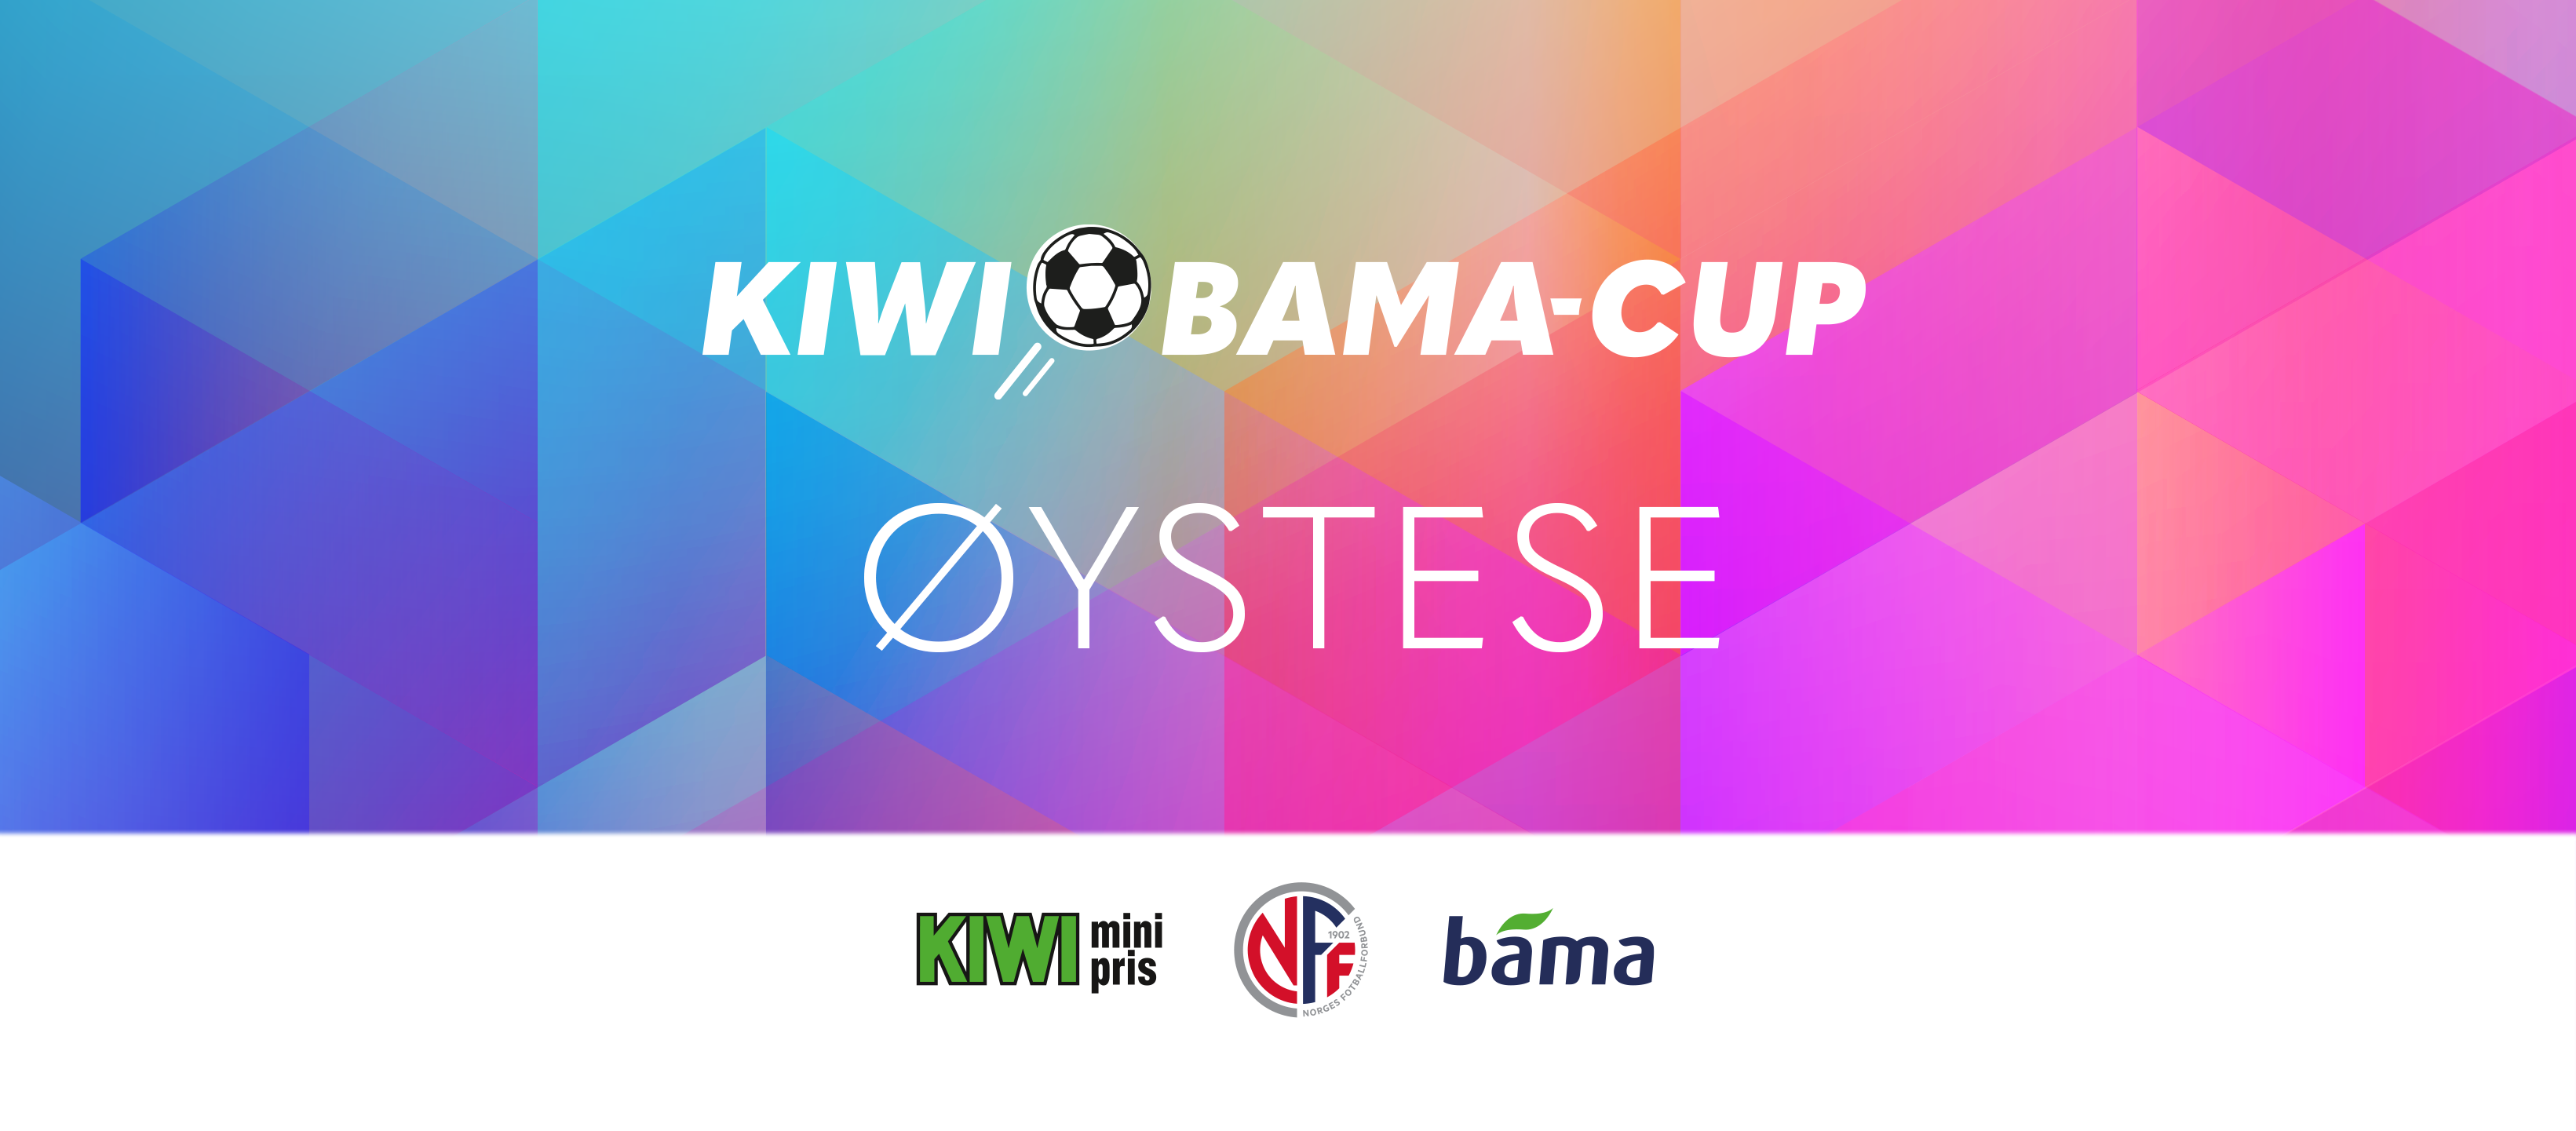 FB-BANNER KIWI-BAMA-Cup - Øystese.png